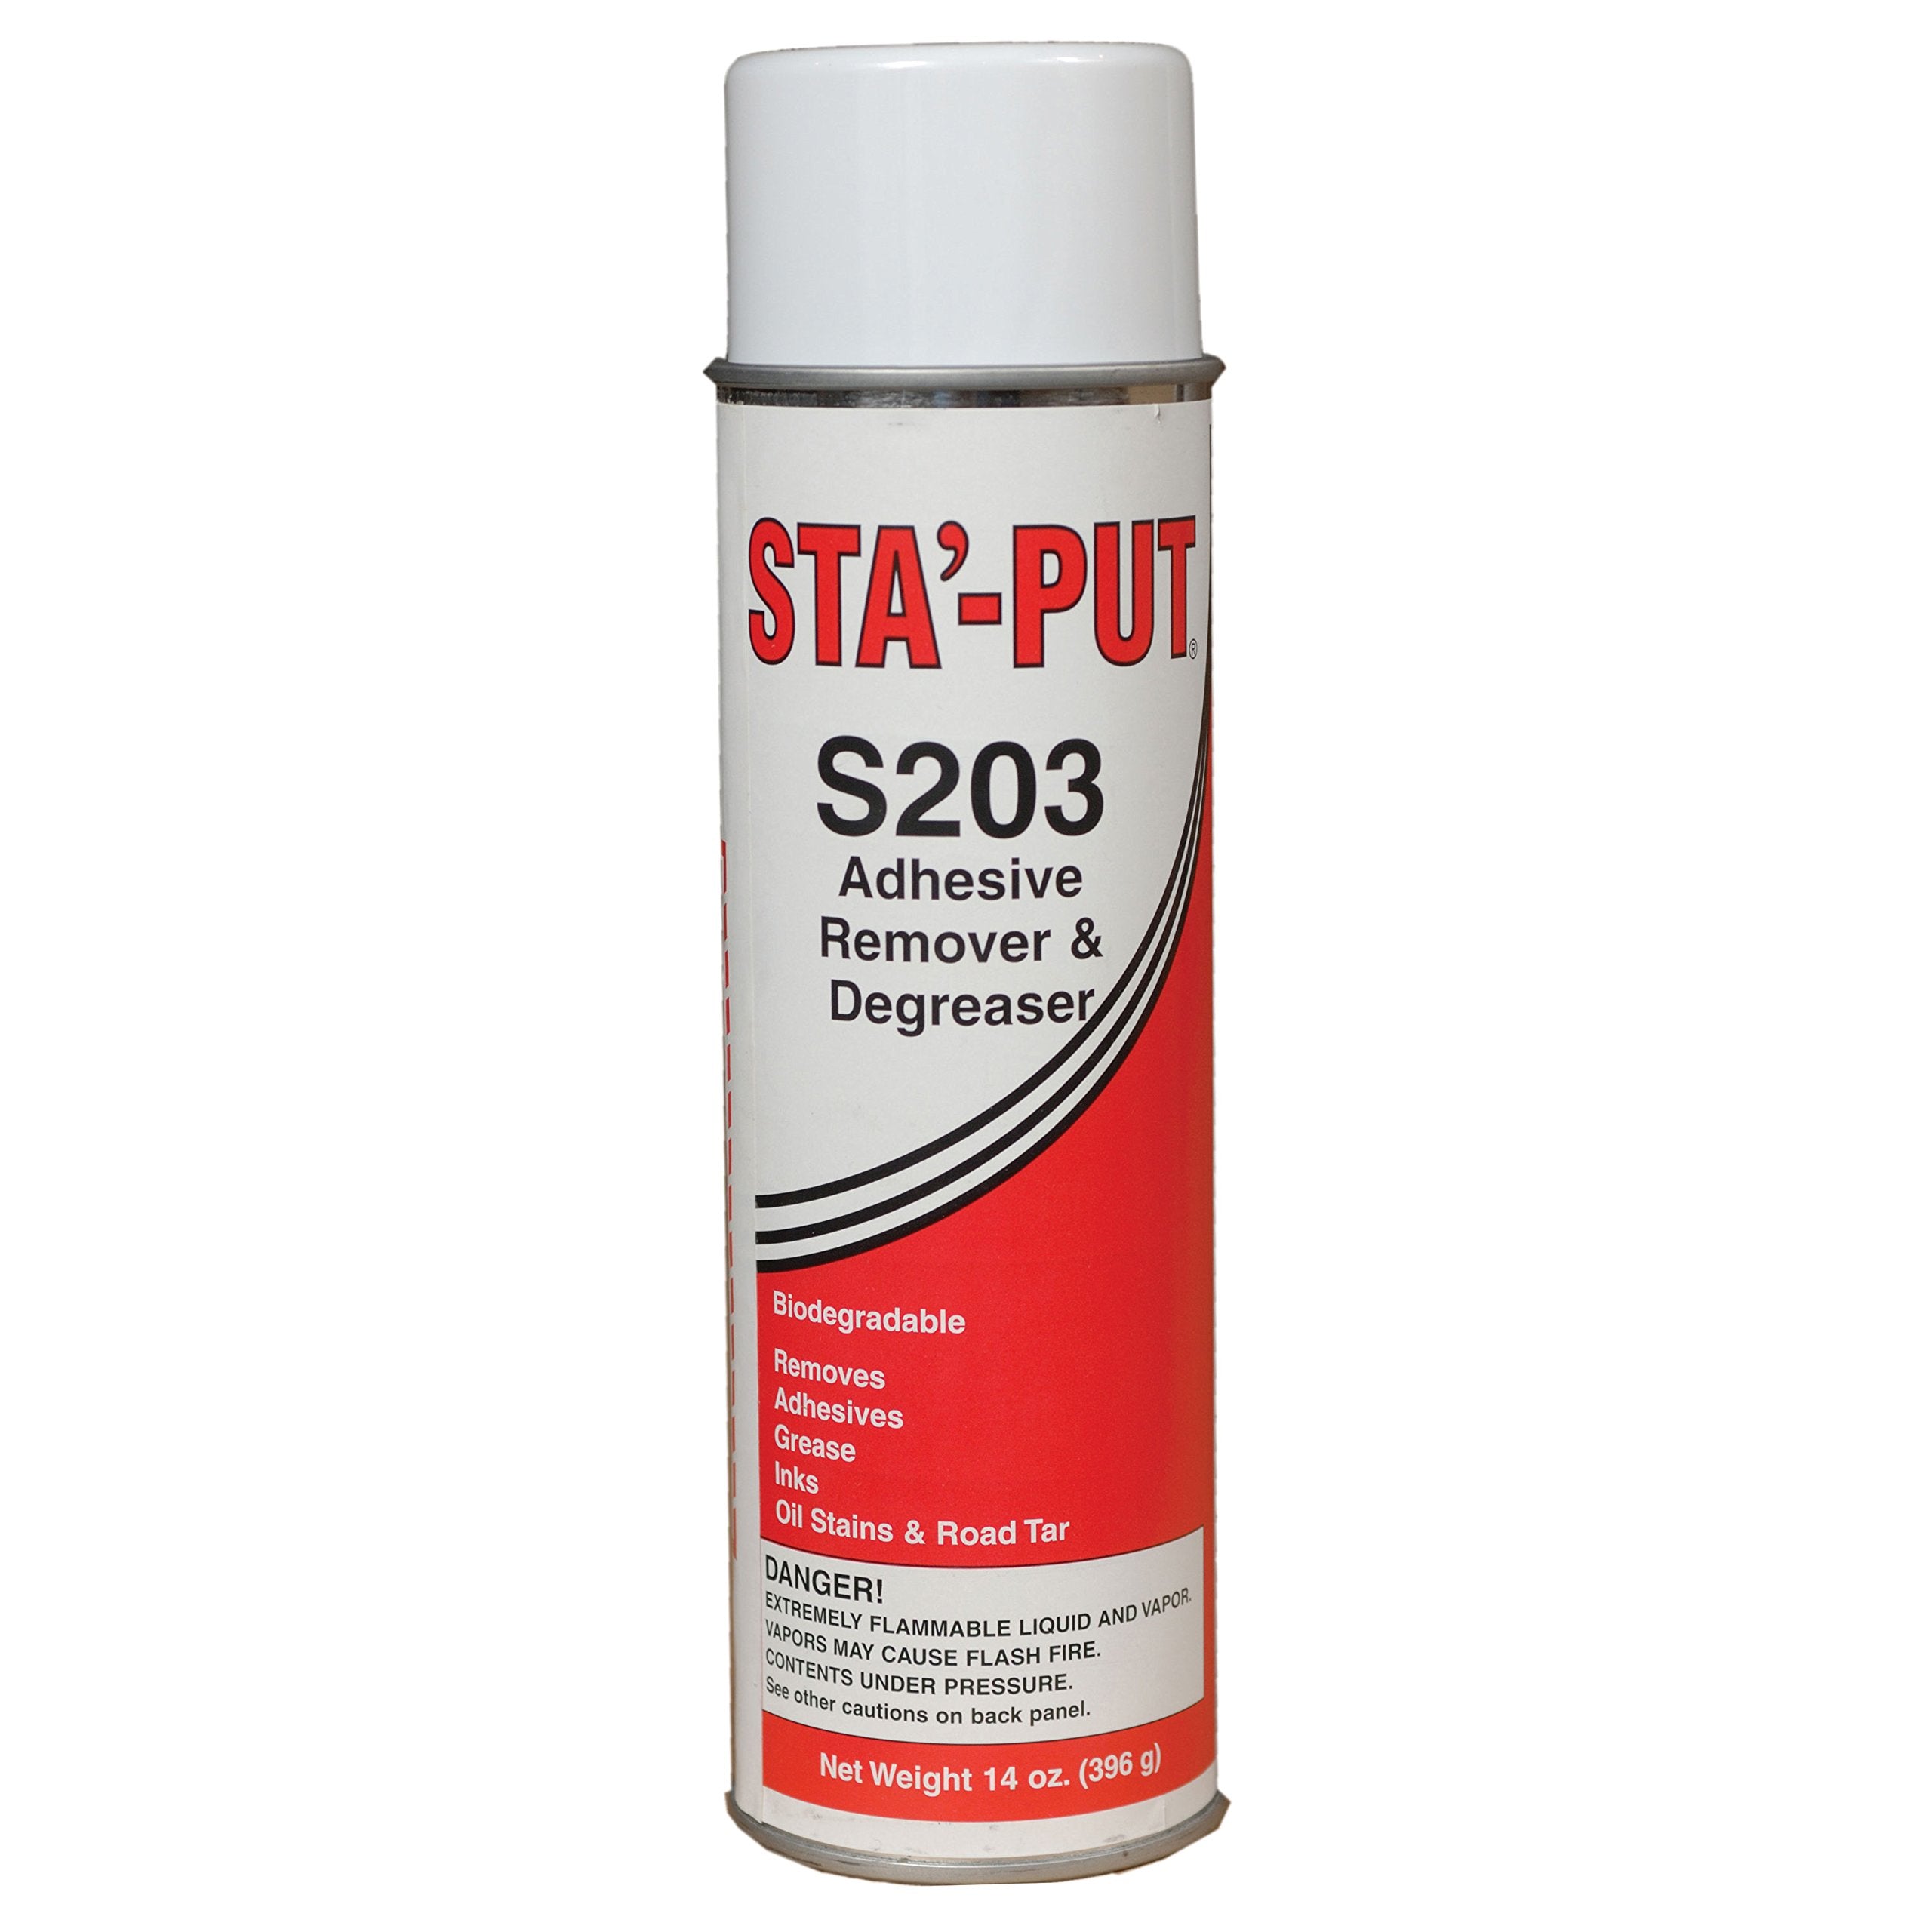 Sta-Put Adhesive Remover